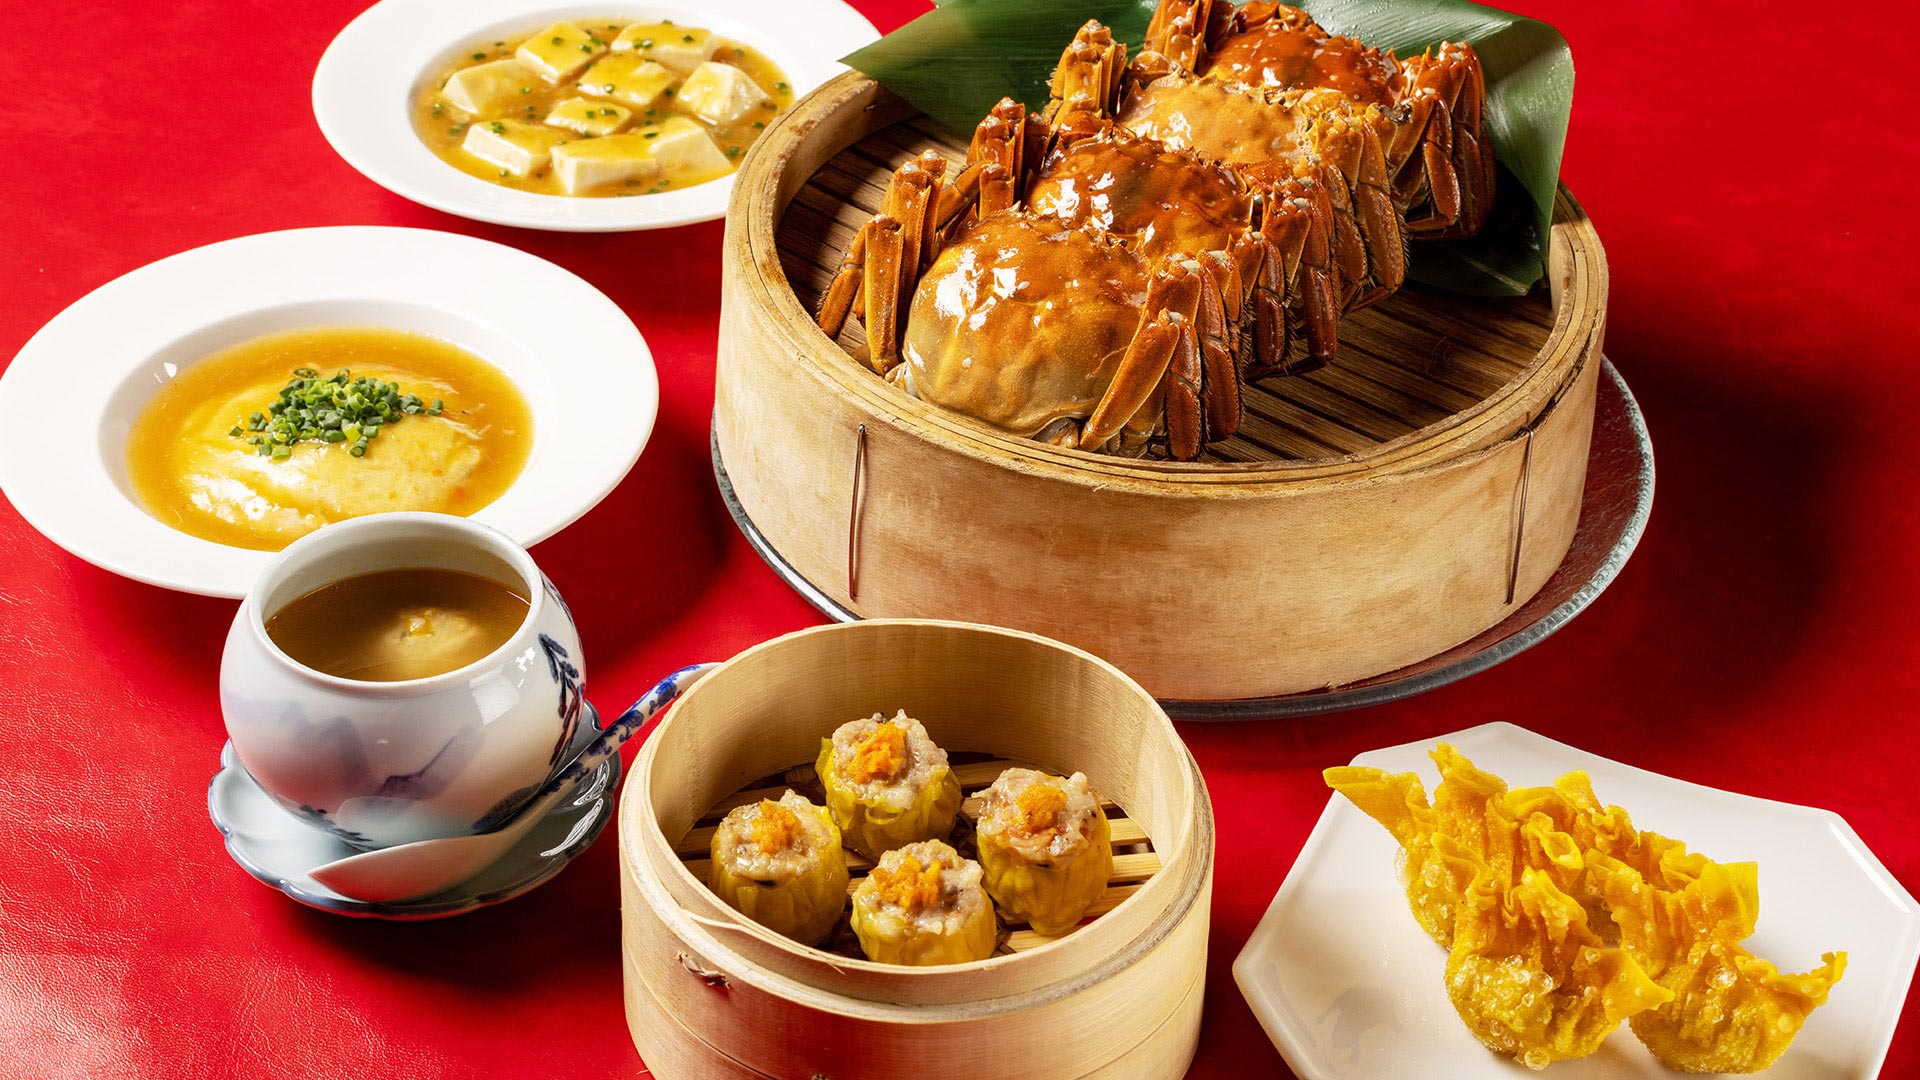 Dim Sum buffet includes Chinese mitten crab menus